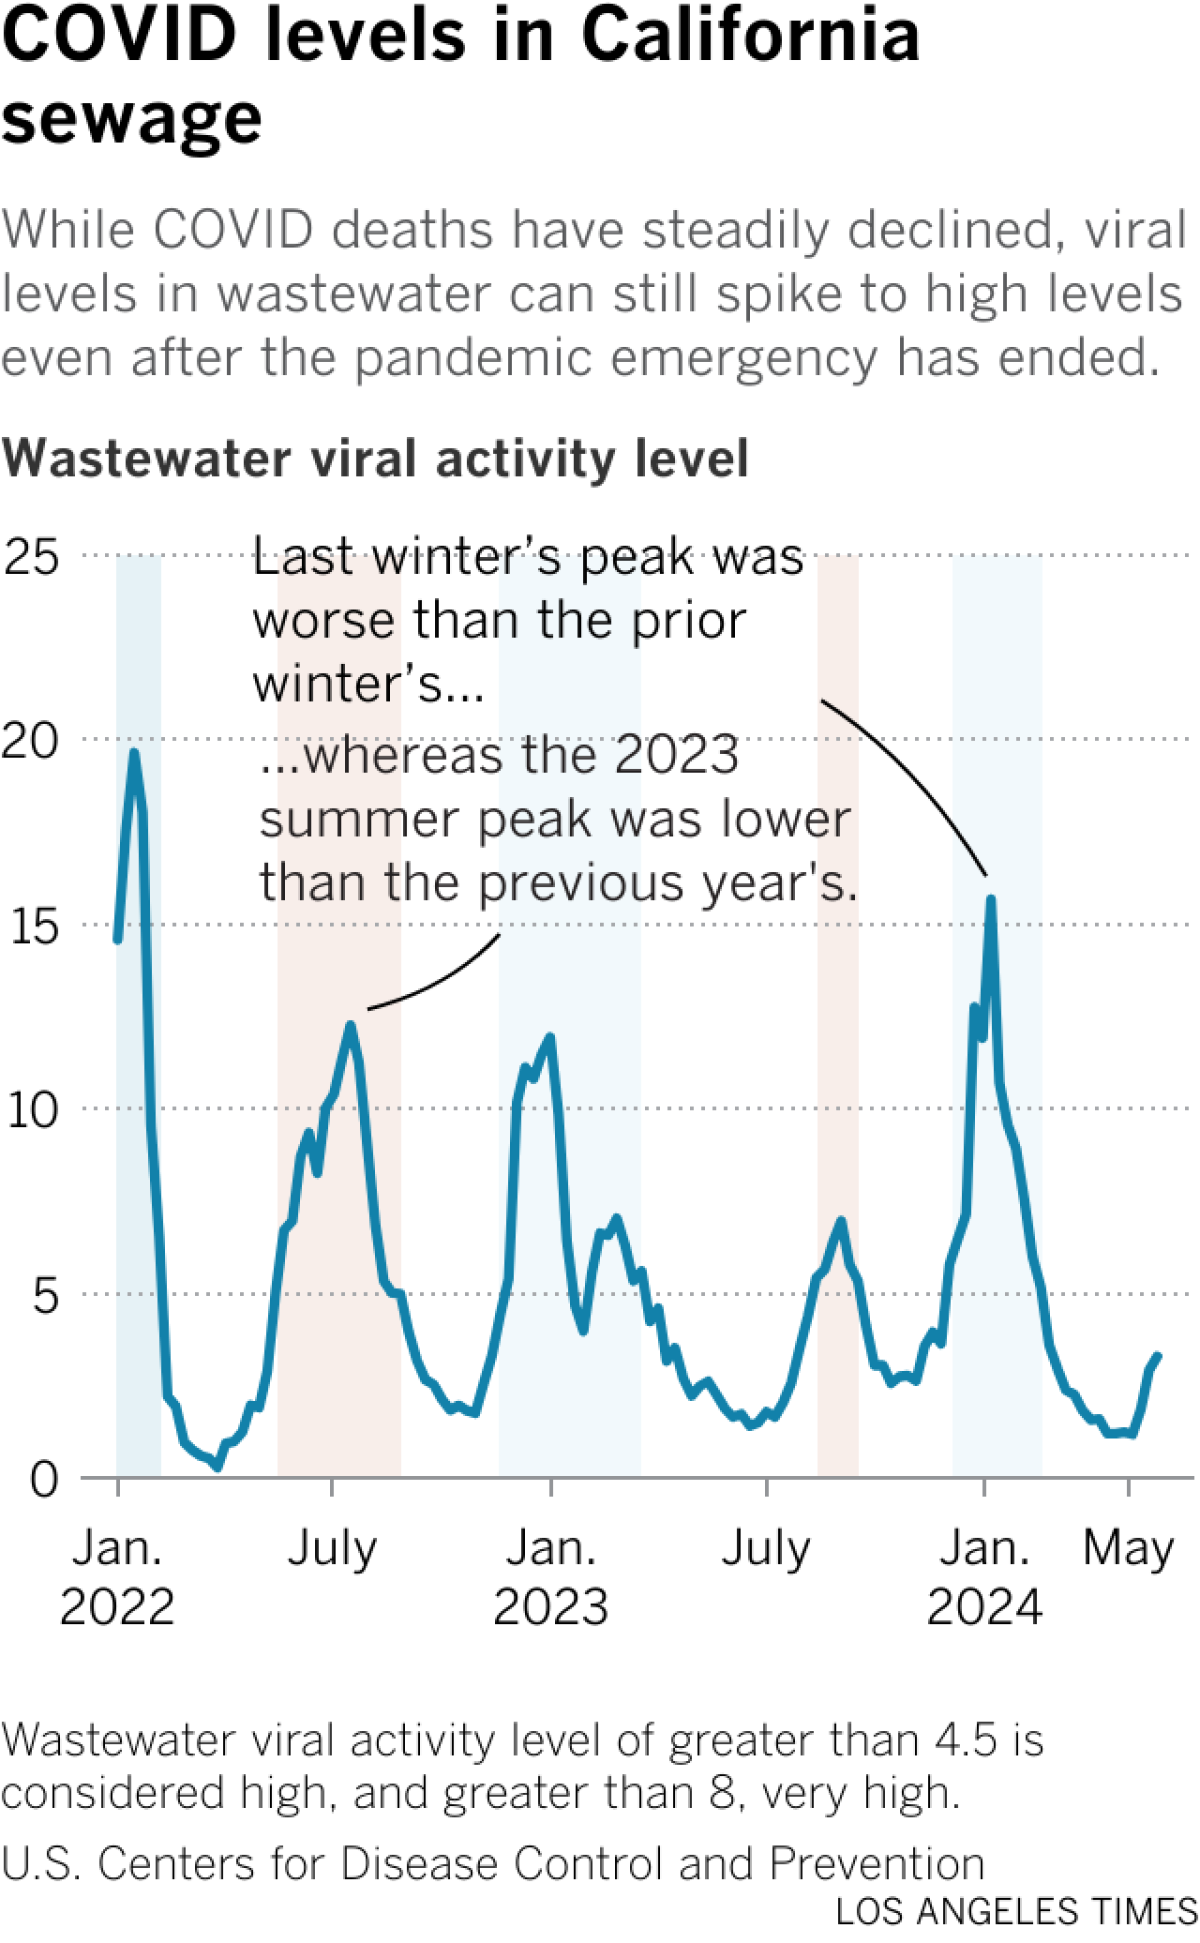 Meskipun kematian akibat virus corona terus menurun, tingkat virus dalam air limbah masih dapat meningkat ke tingkat yang tinggi bahkan setelah masa darurat pandemi berakhir.